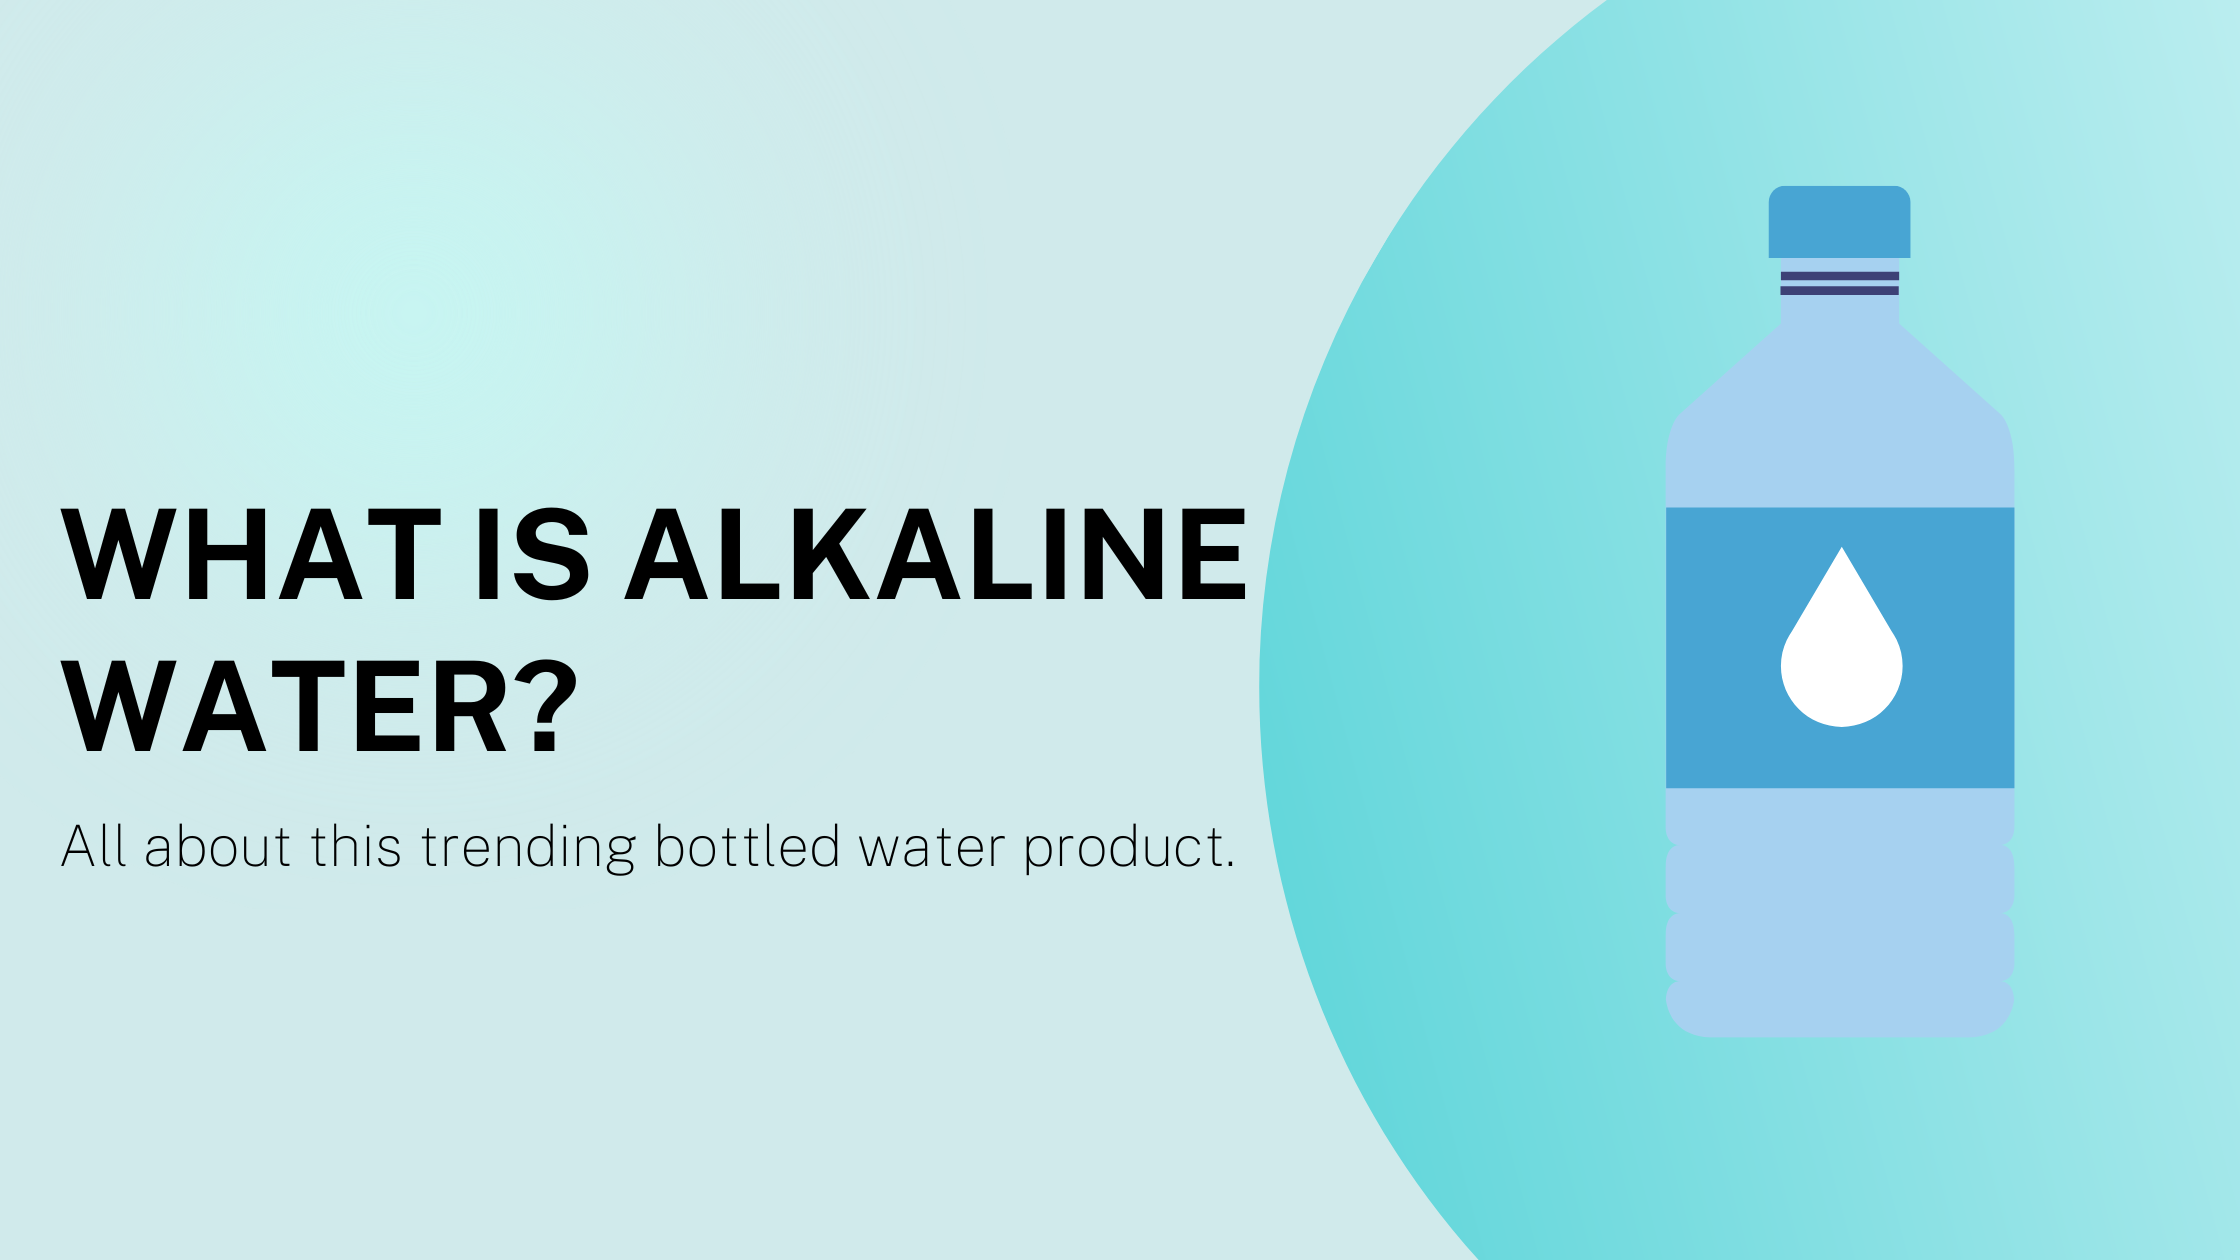 What is Alkaline water?